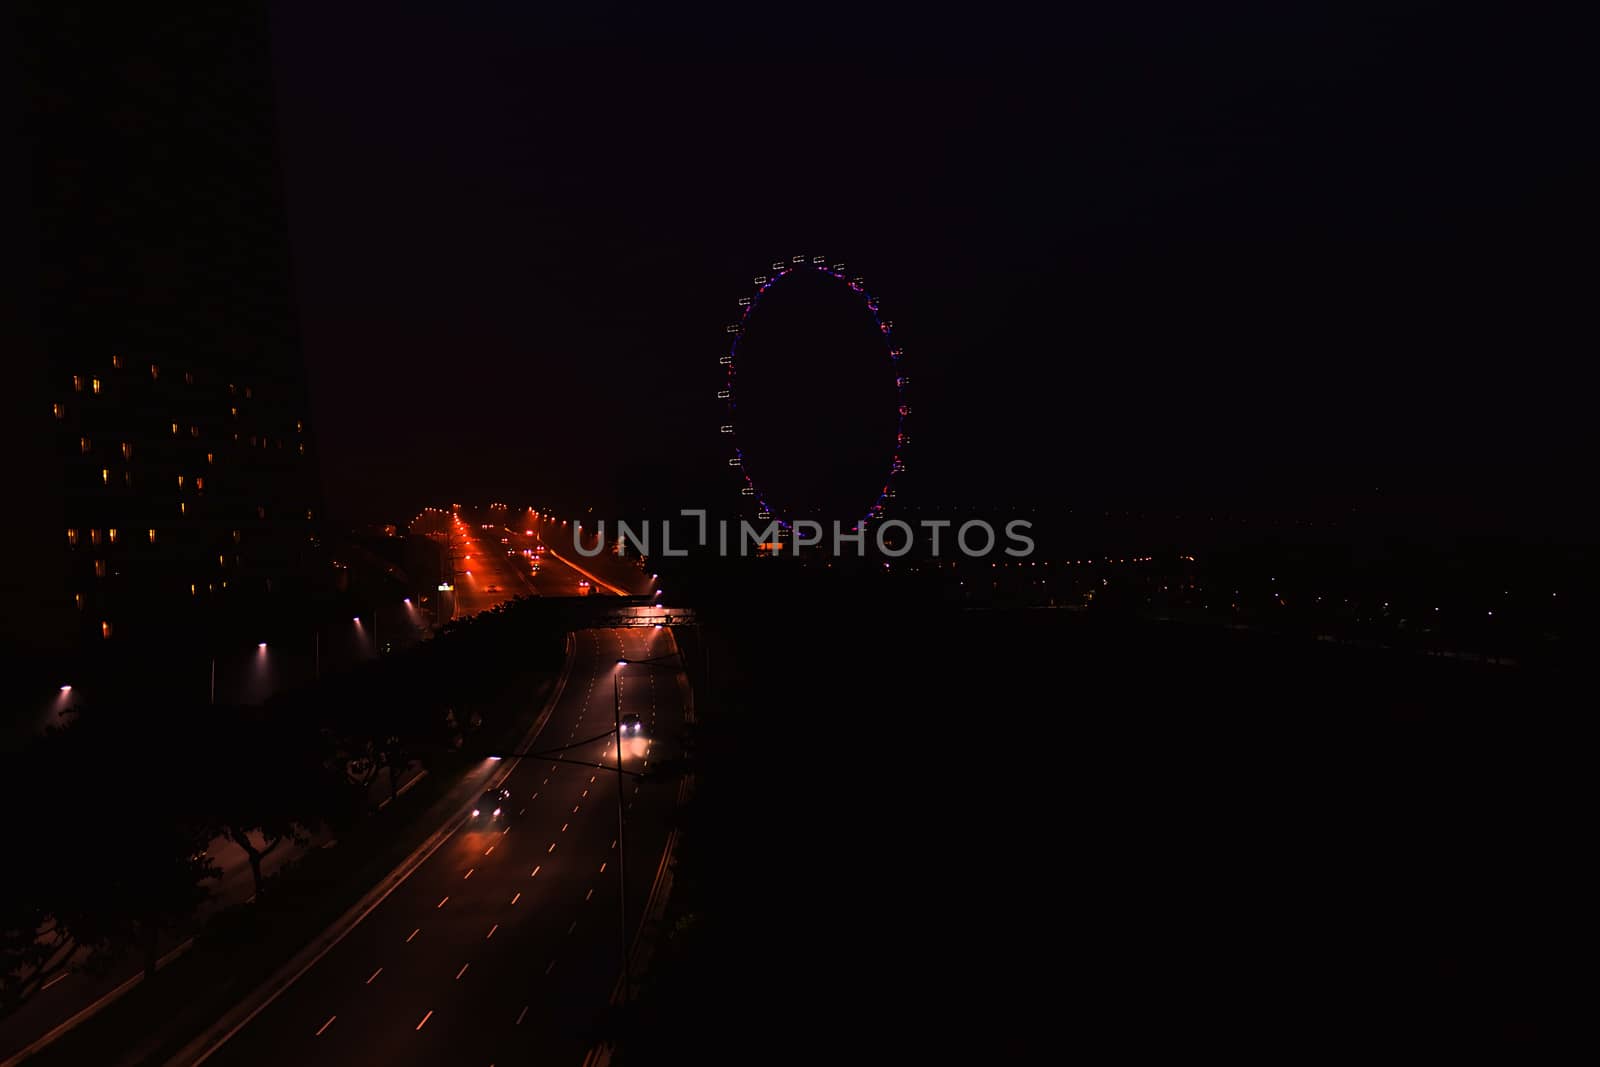 Singapore cityscape at night